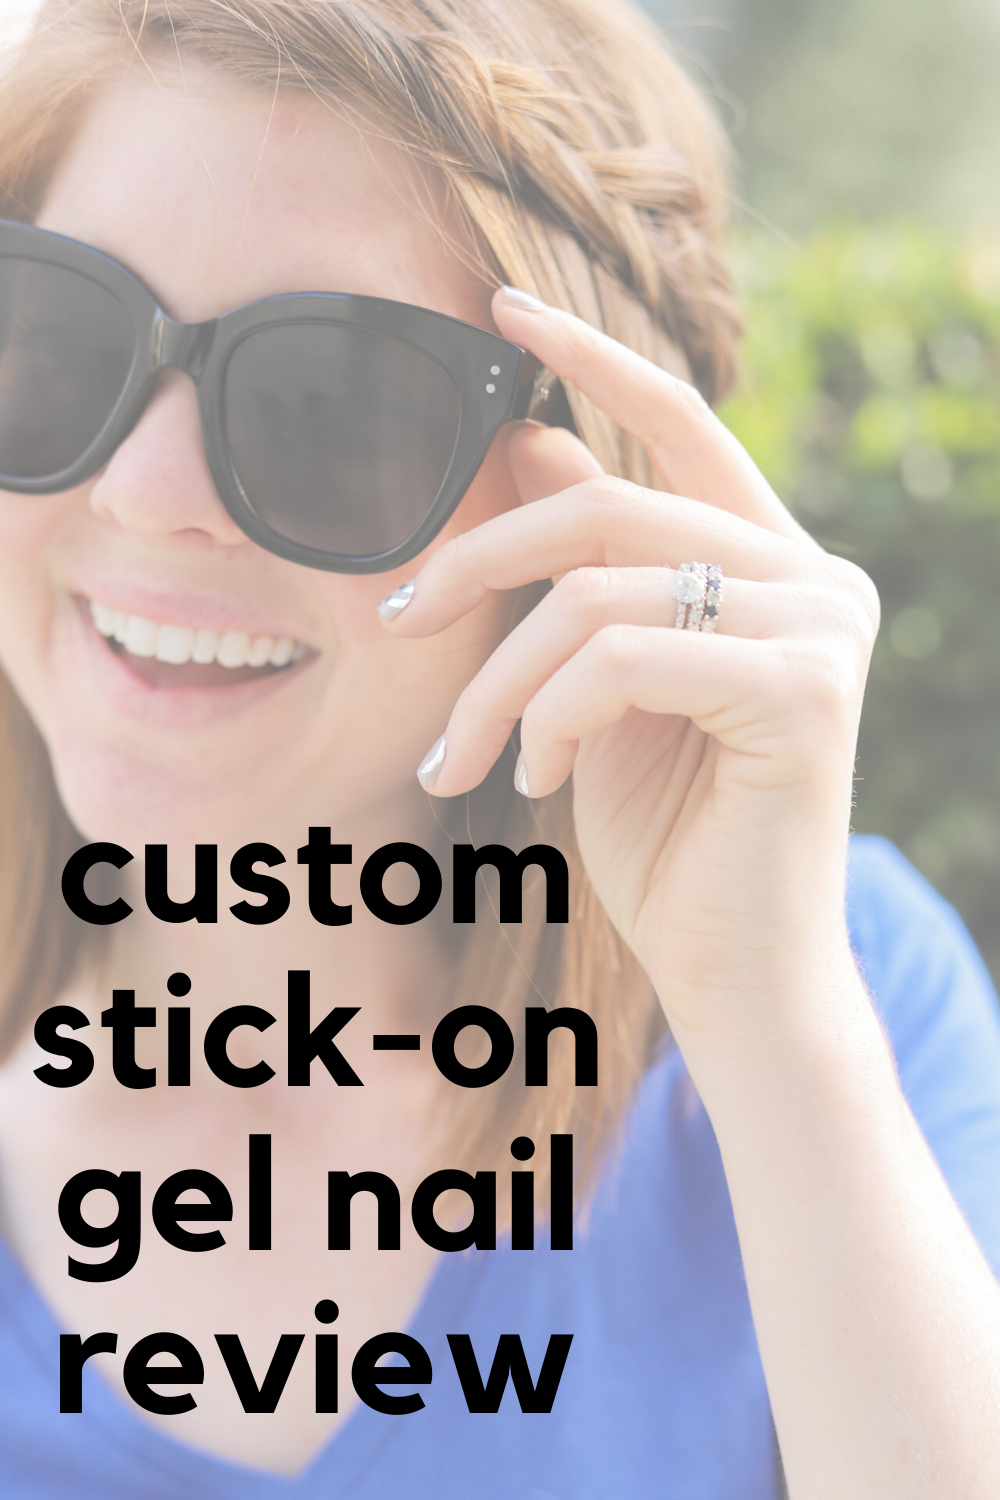 manime custom stick-on gel nail review, discount code, nontoxic gel nails, cruelty free, ten free, 10 free, lments of style, la blogger, los angeles, nail art, nail ideas, mp nails, press on nails